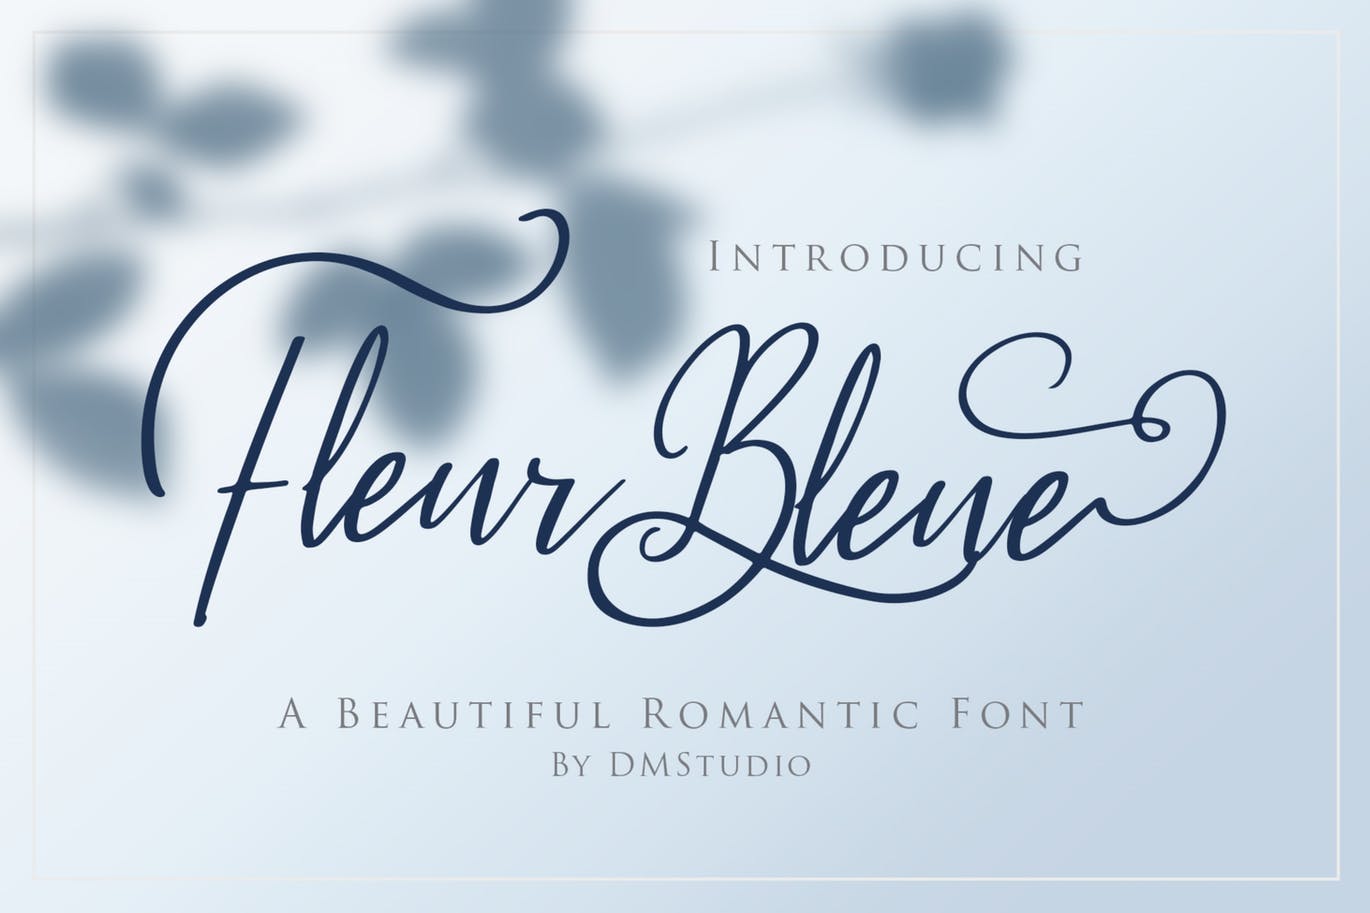 A beautiful romantic font